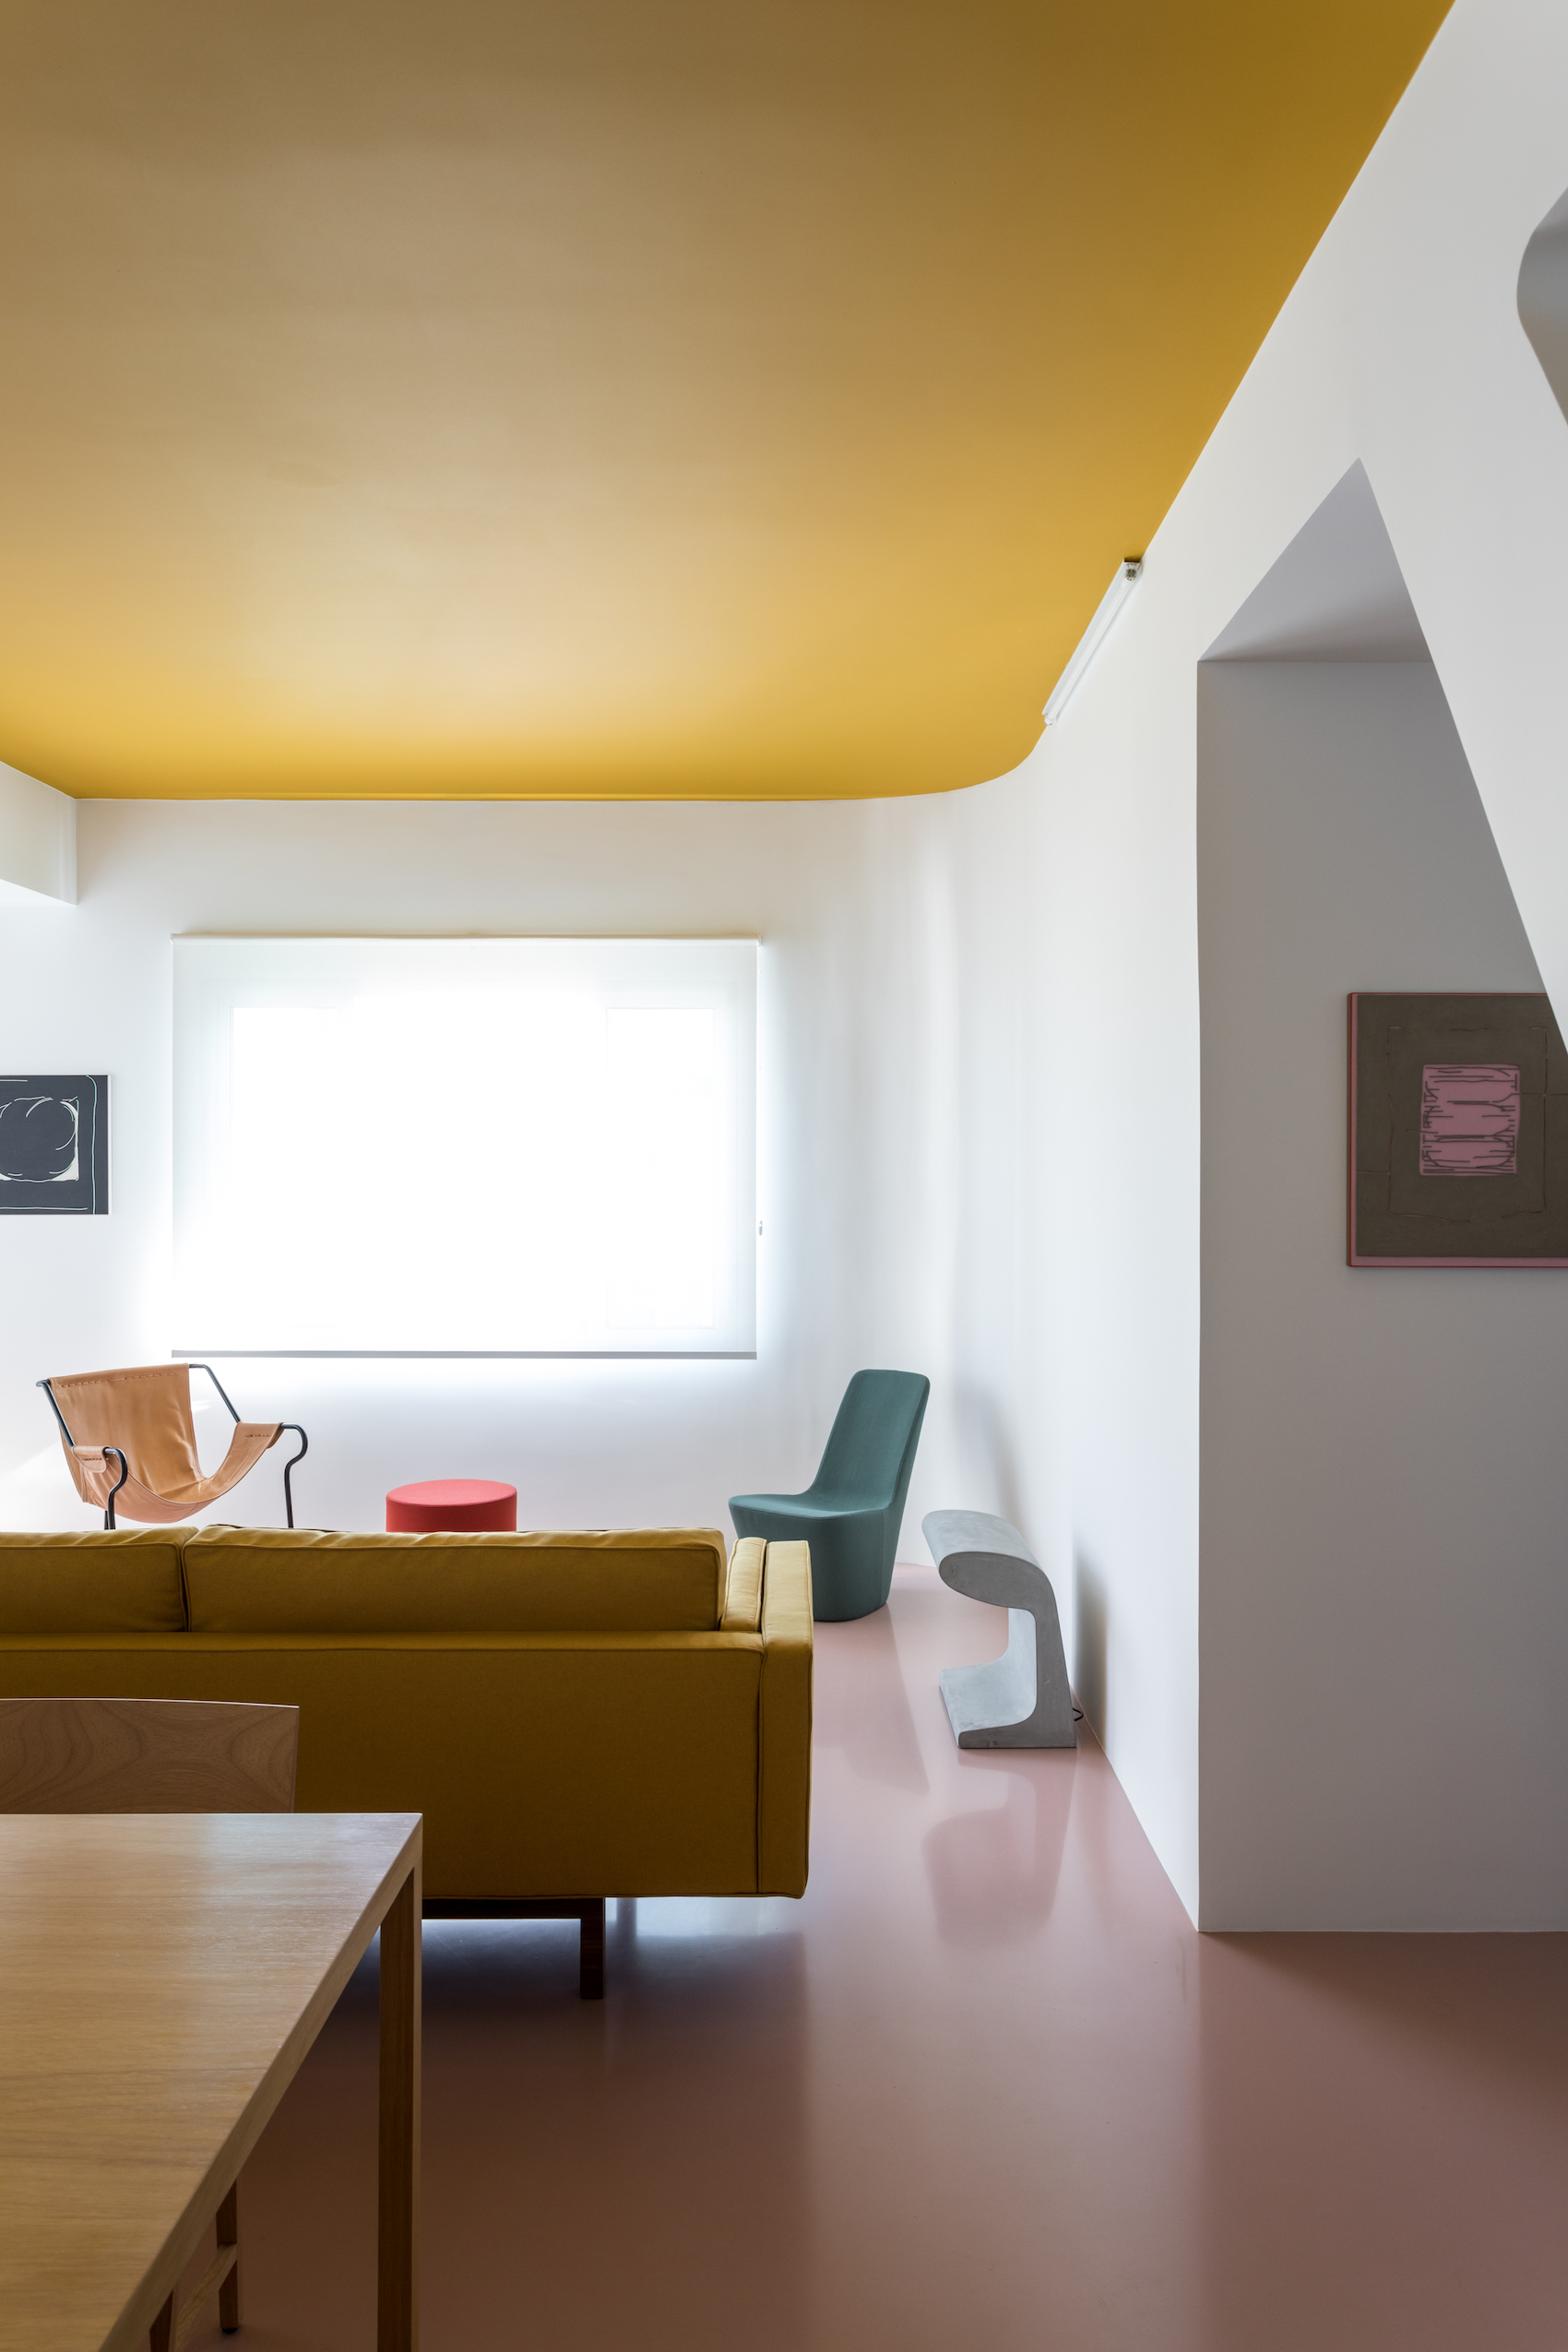 Apartmento Cass by Felipe Hess